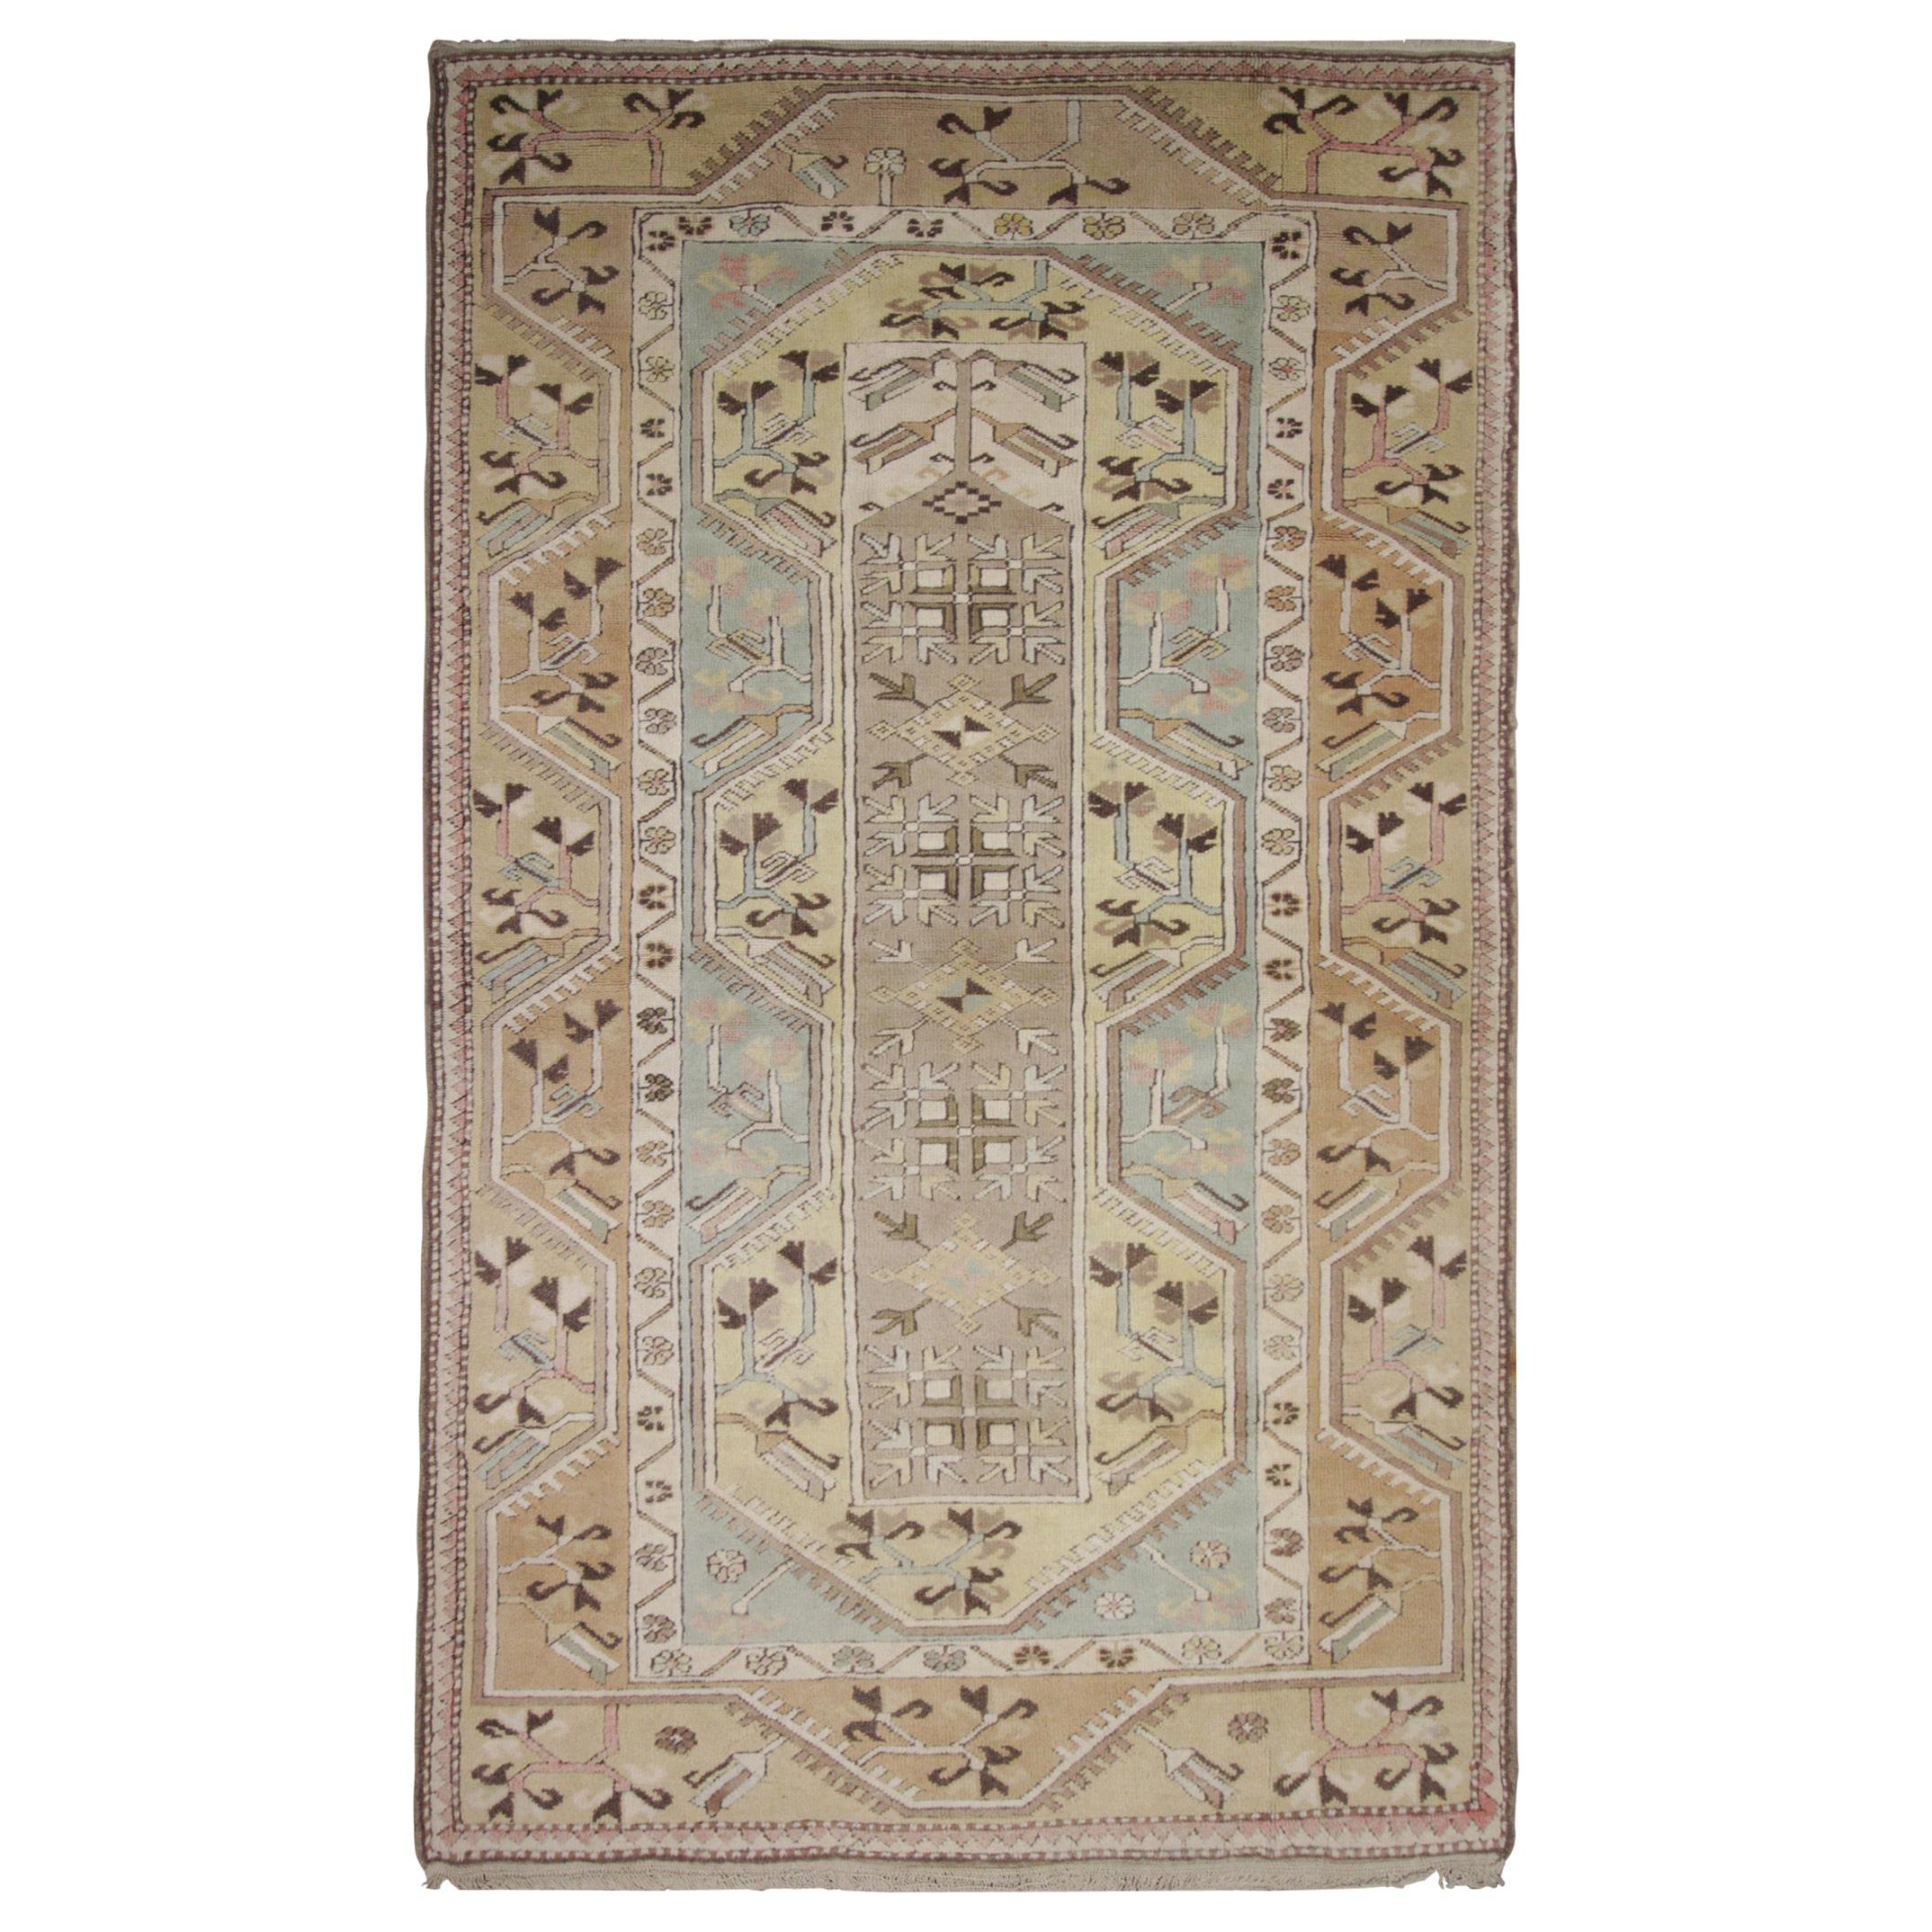 Vintage Carpet Turkish Rug Handwoven Beige Cream Wool Rug